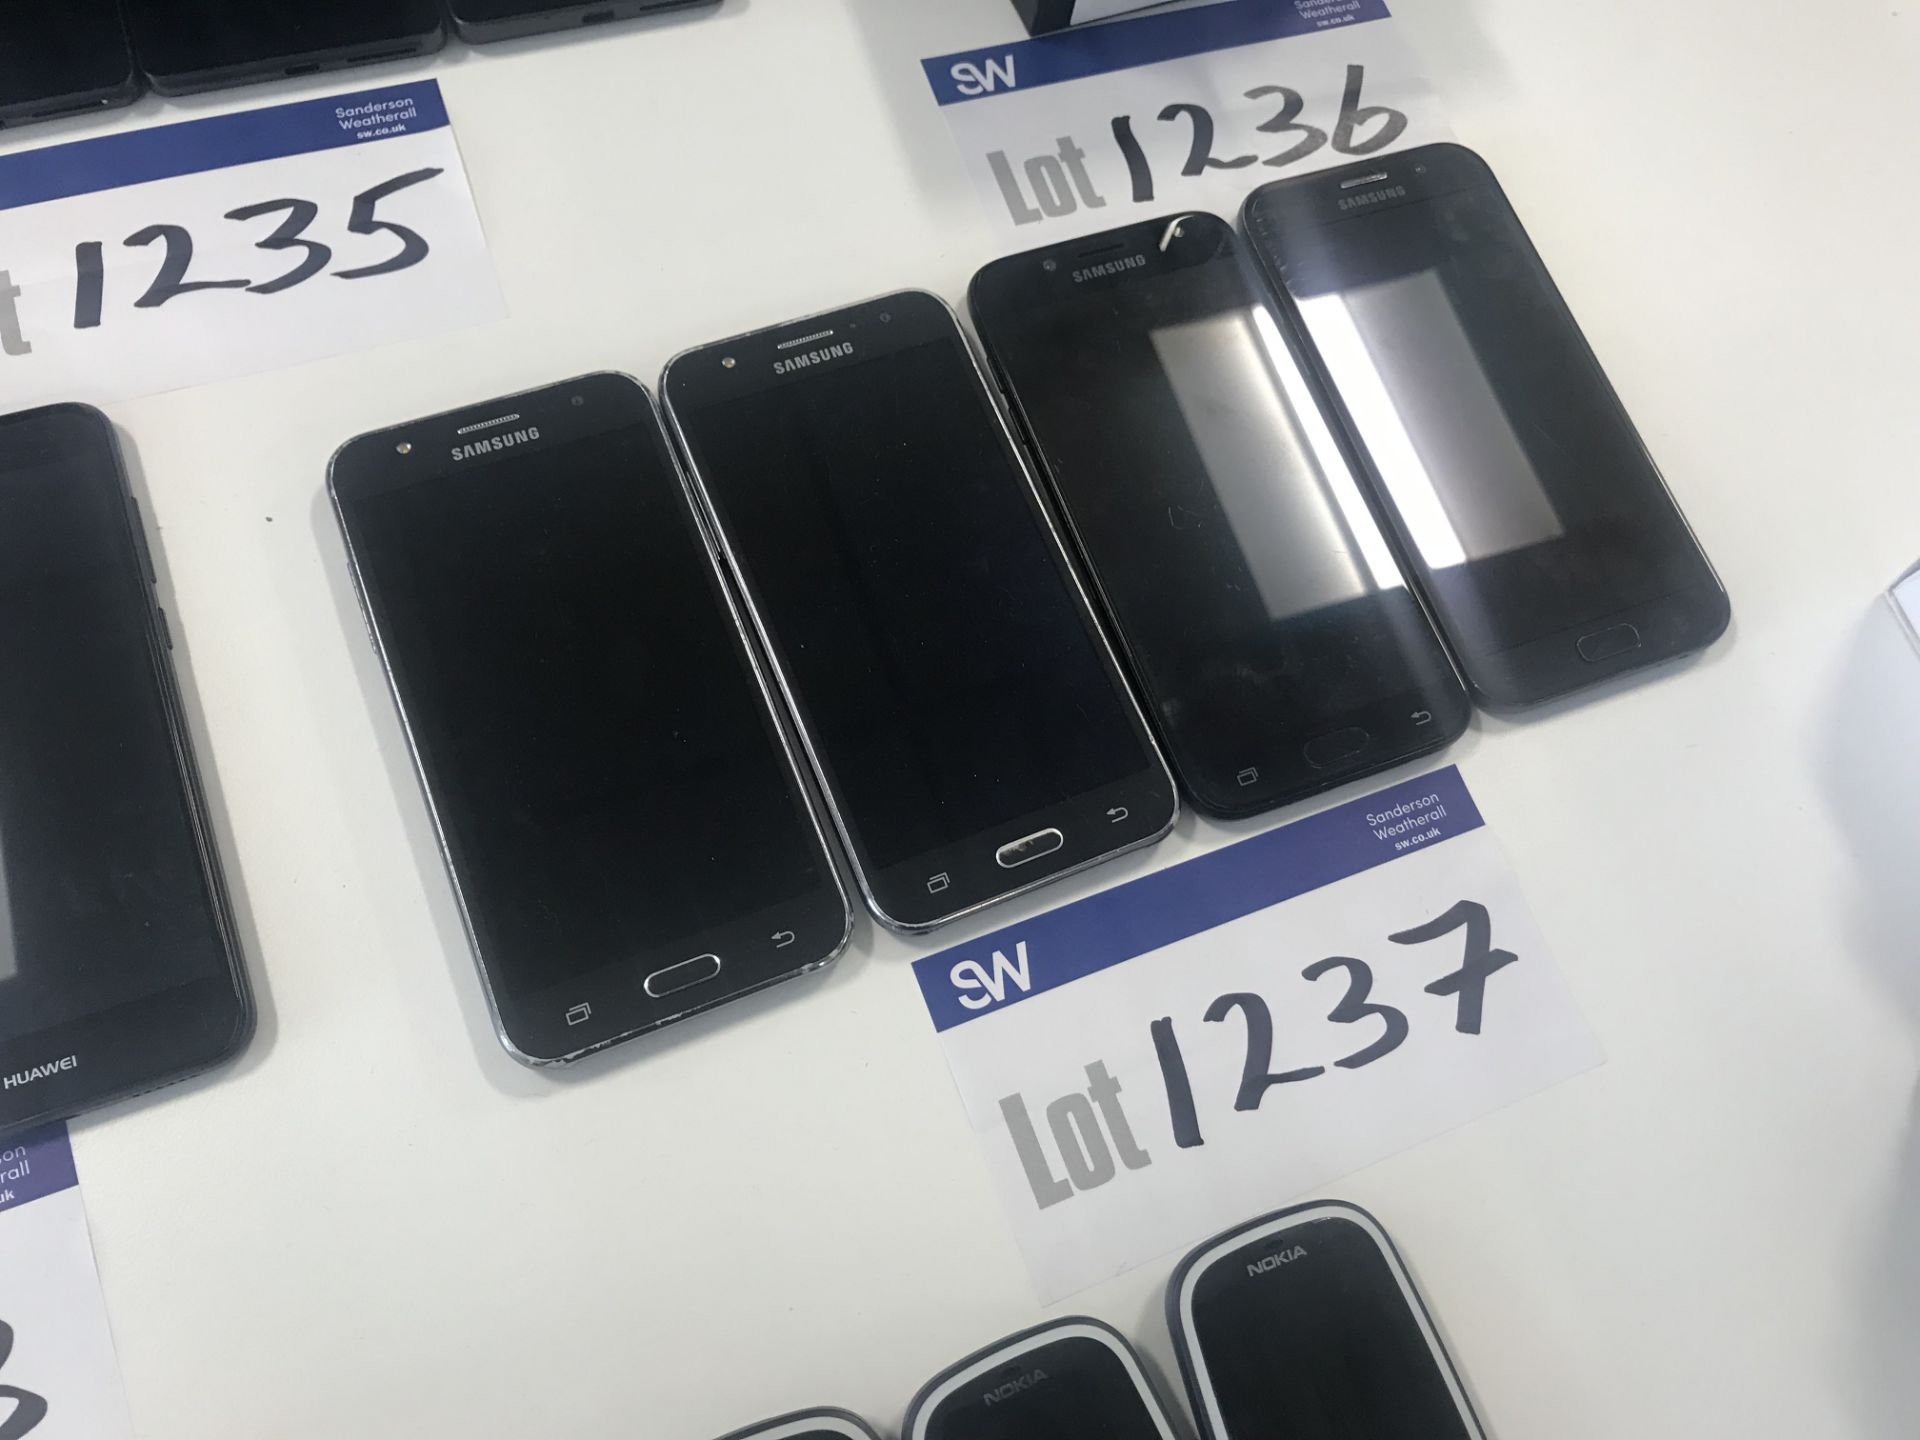 4 x Assorted Samsung Mobile Phone Handsets